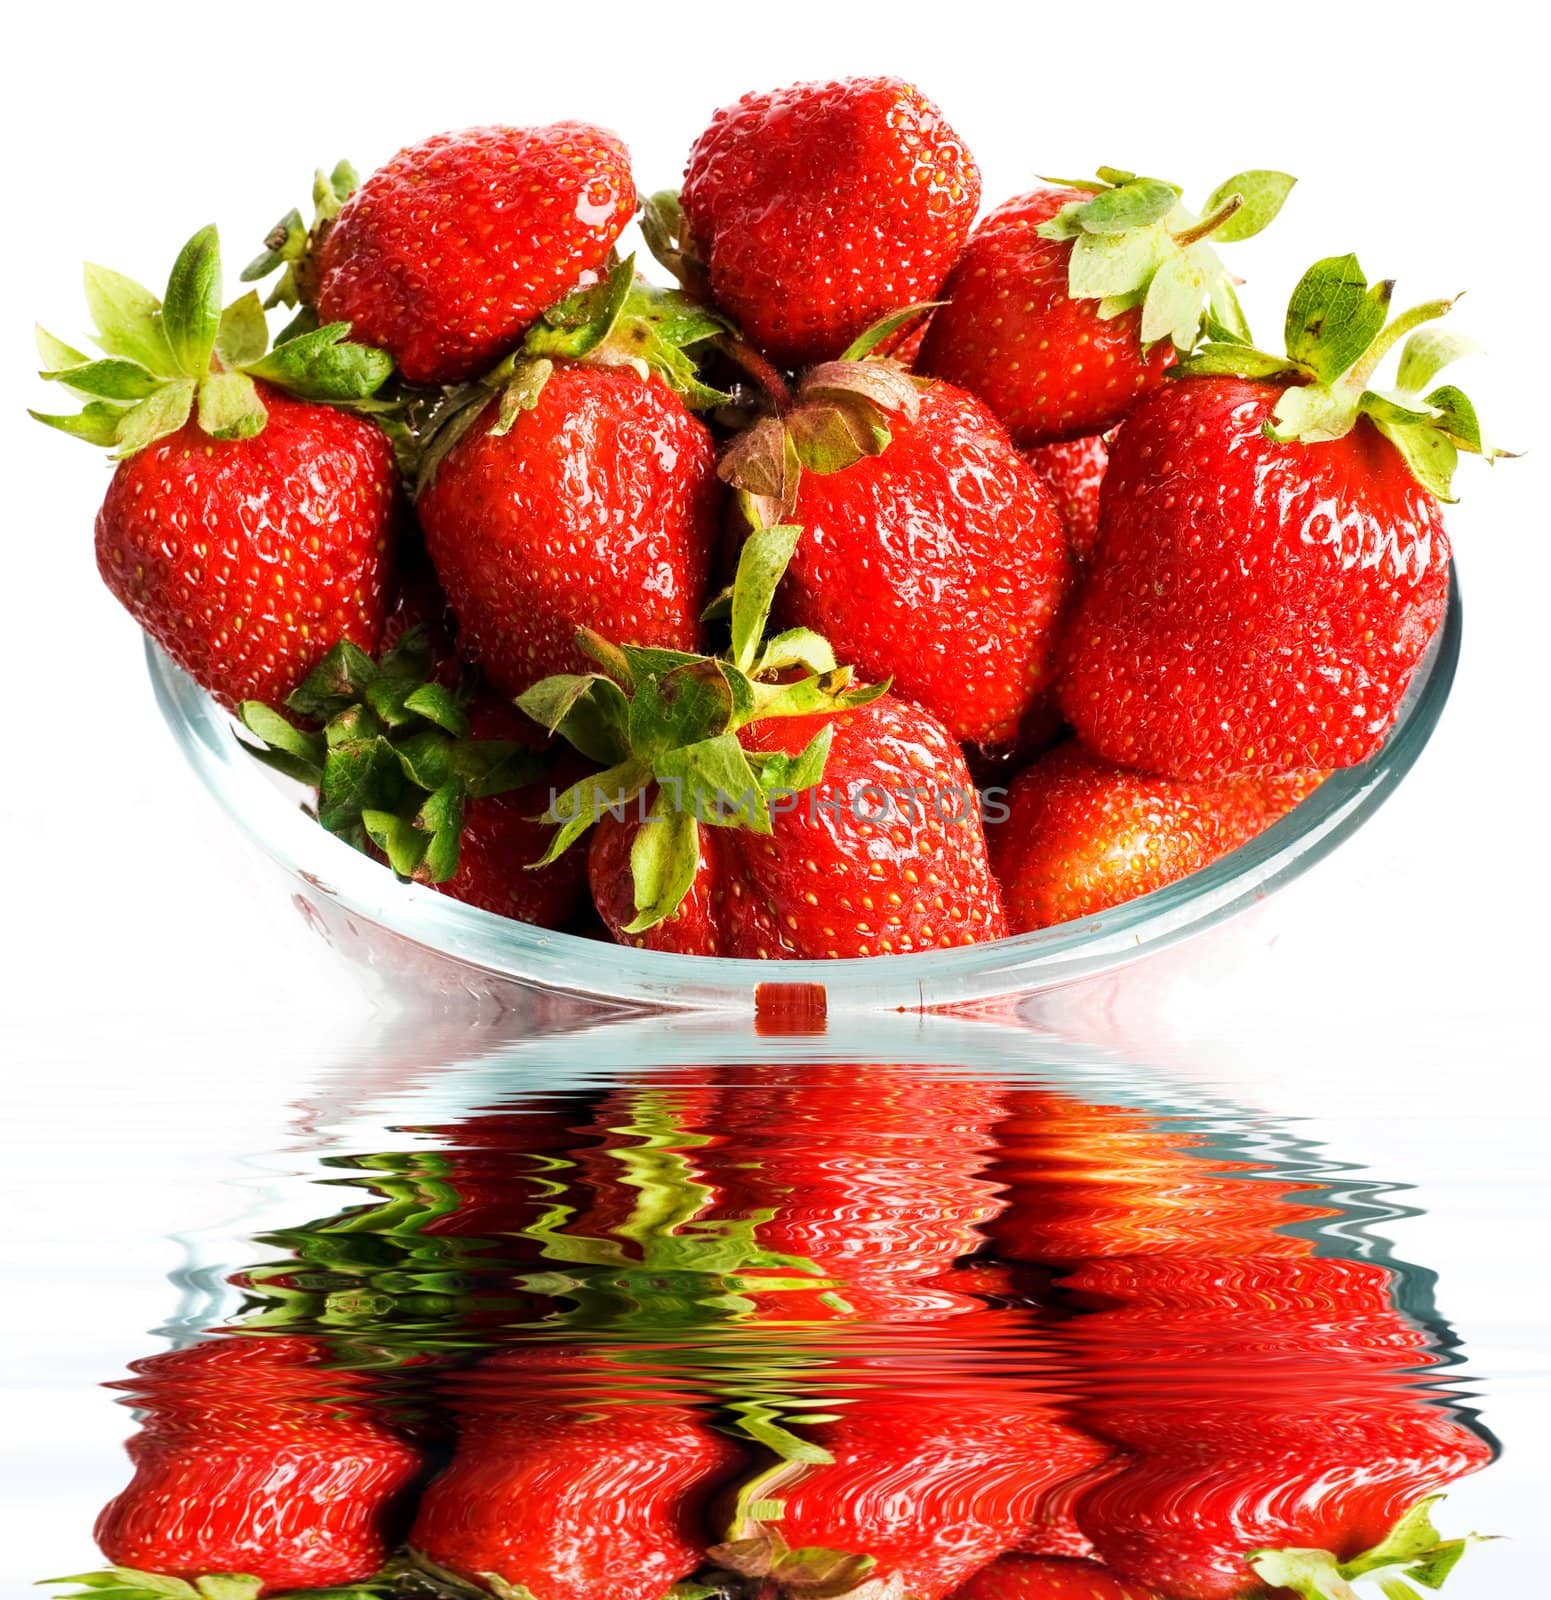 Strawberries in glass by velkol